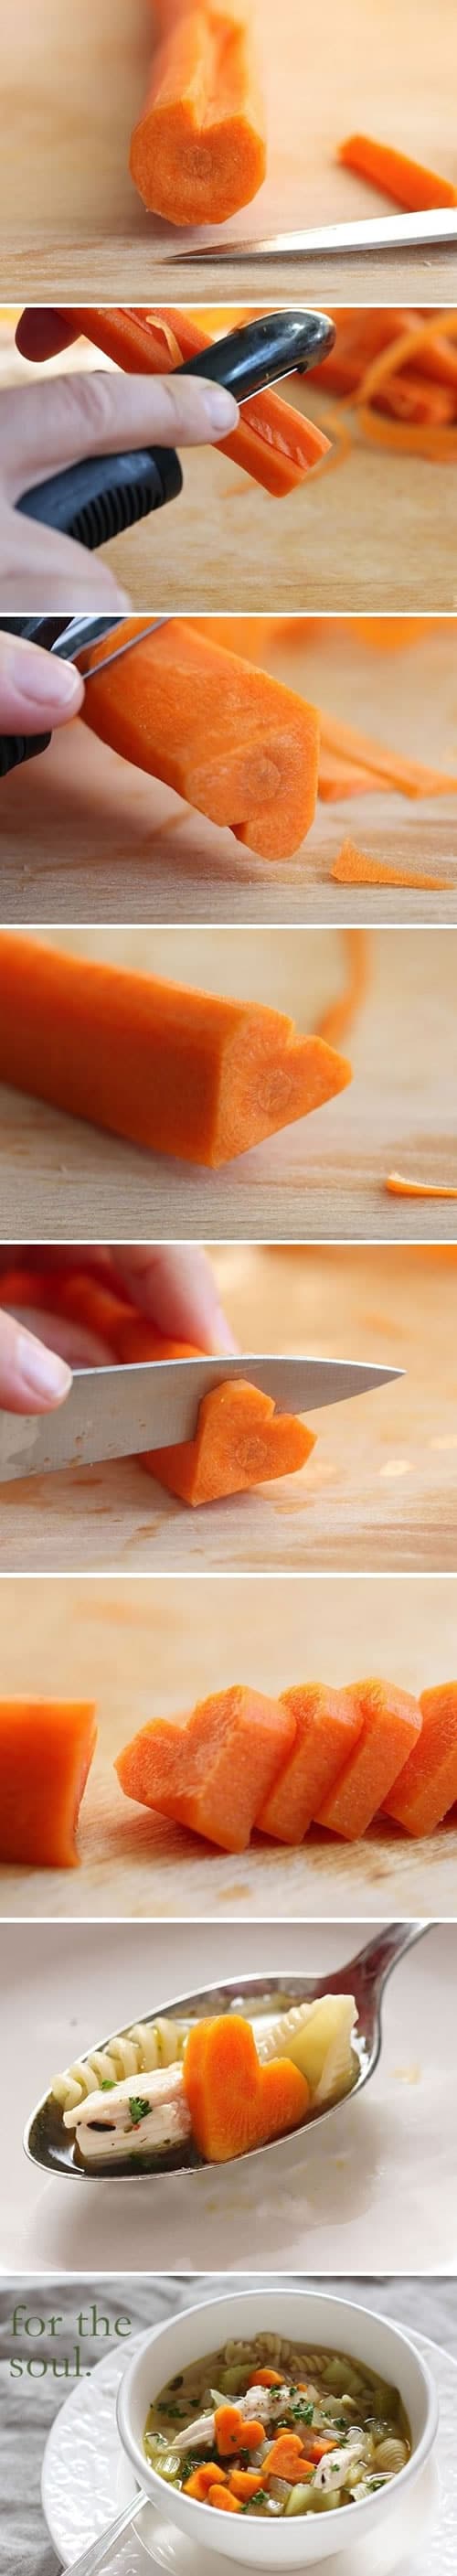 Comida con forma de corazón: zanahorias